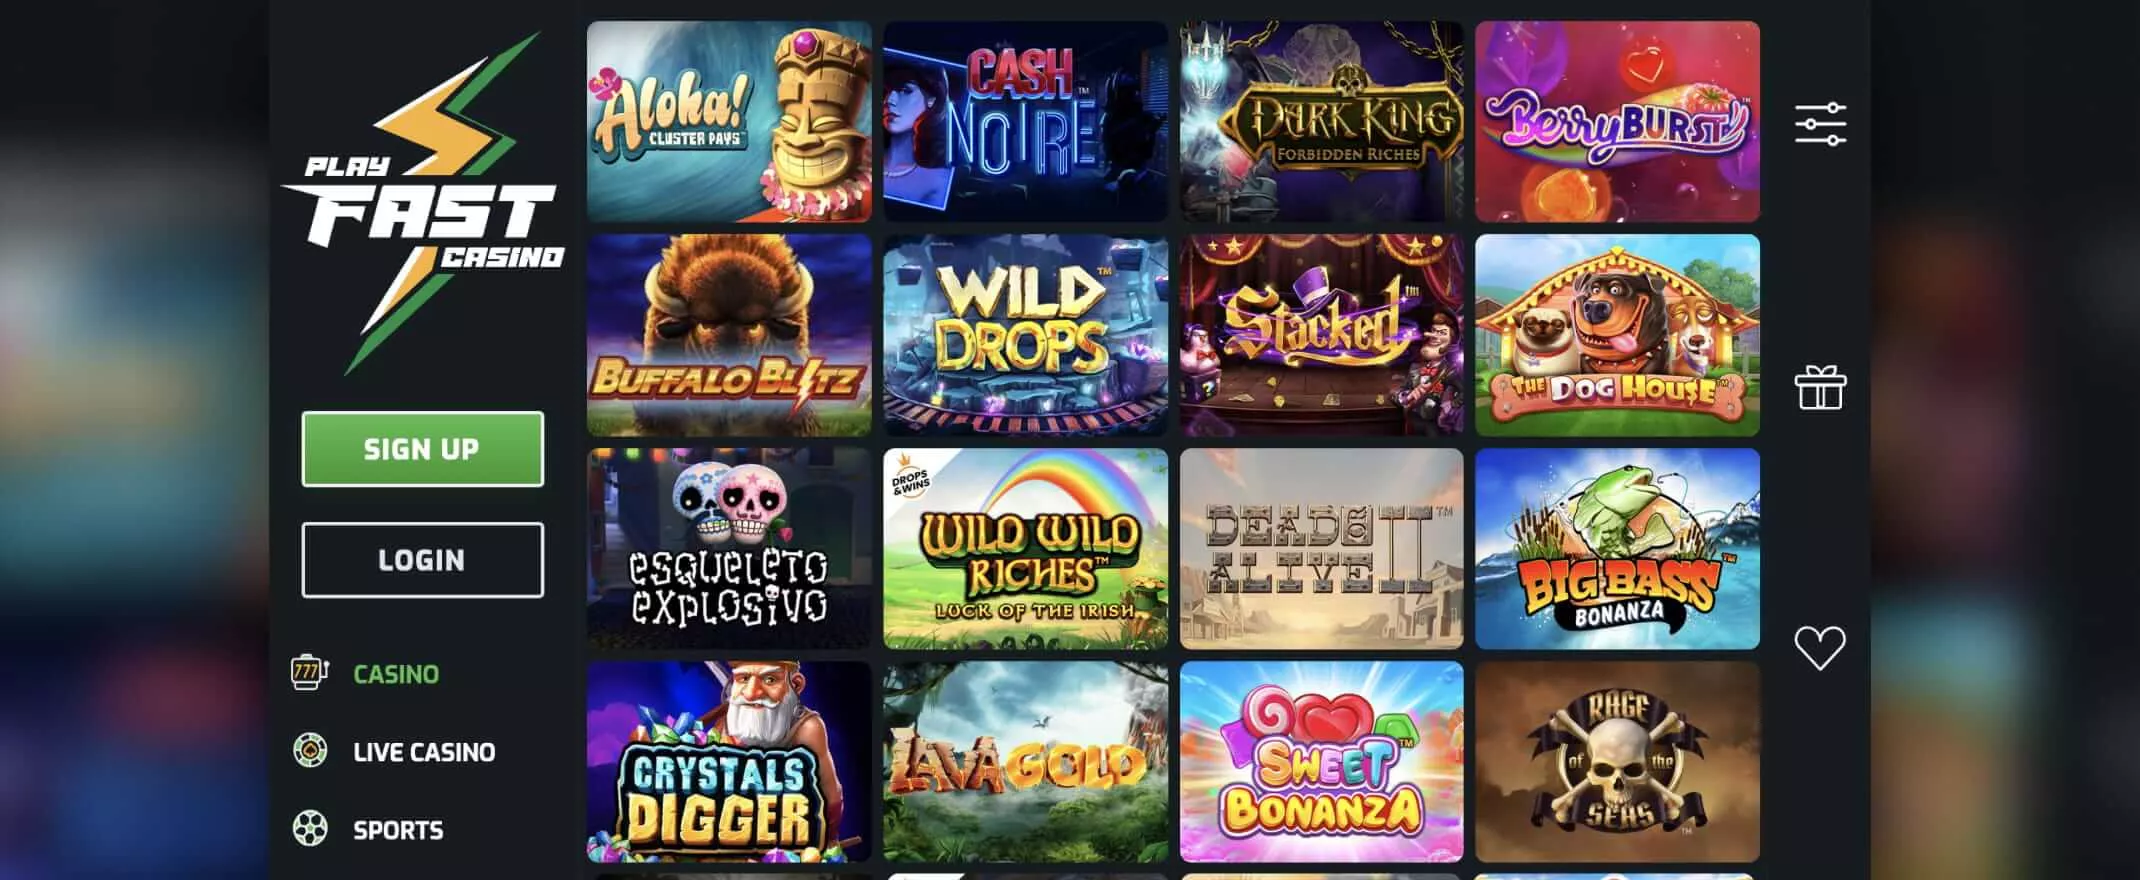 playfast casino games screenshot